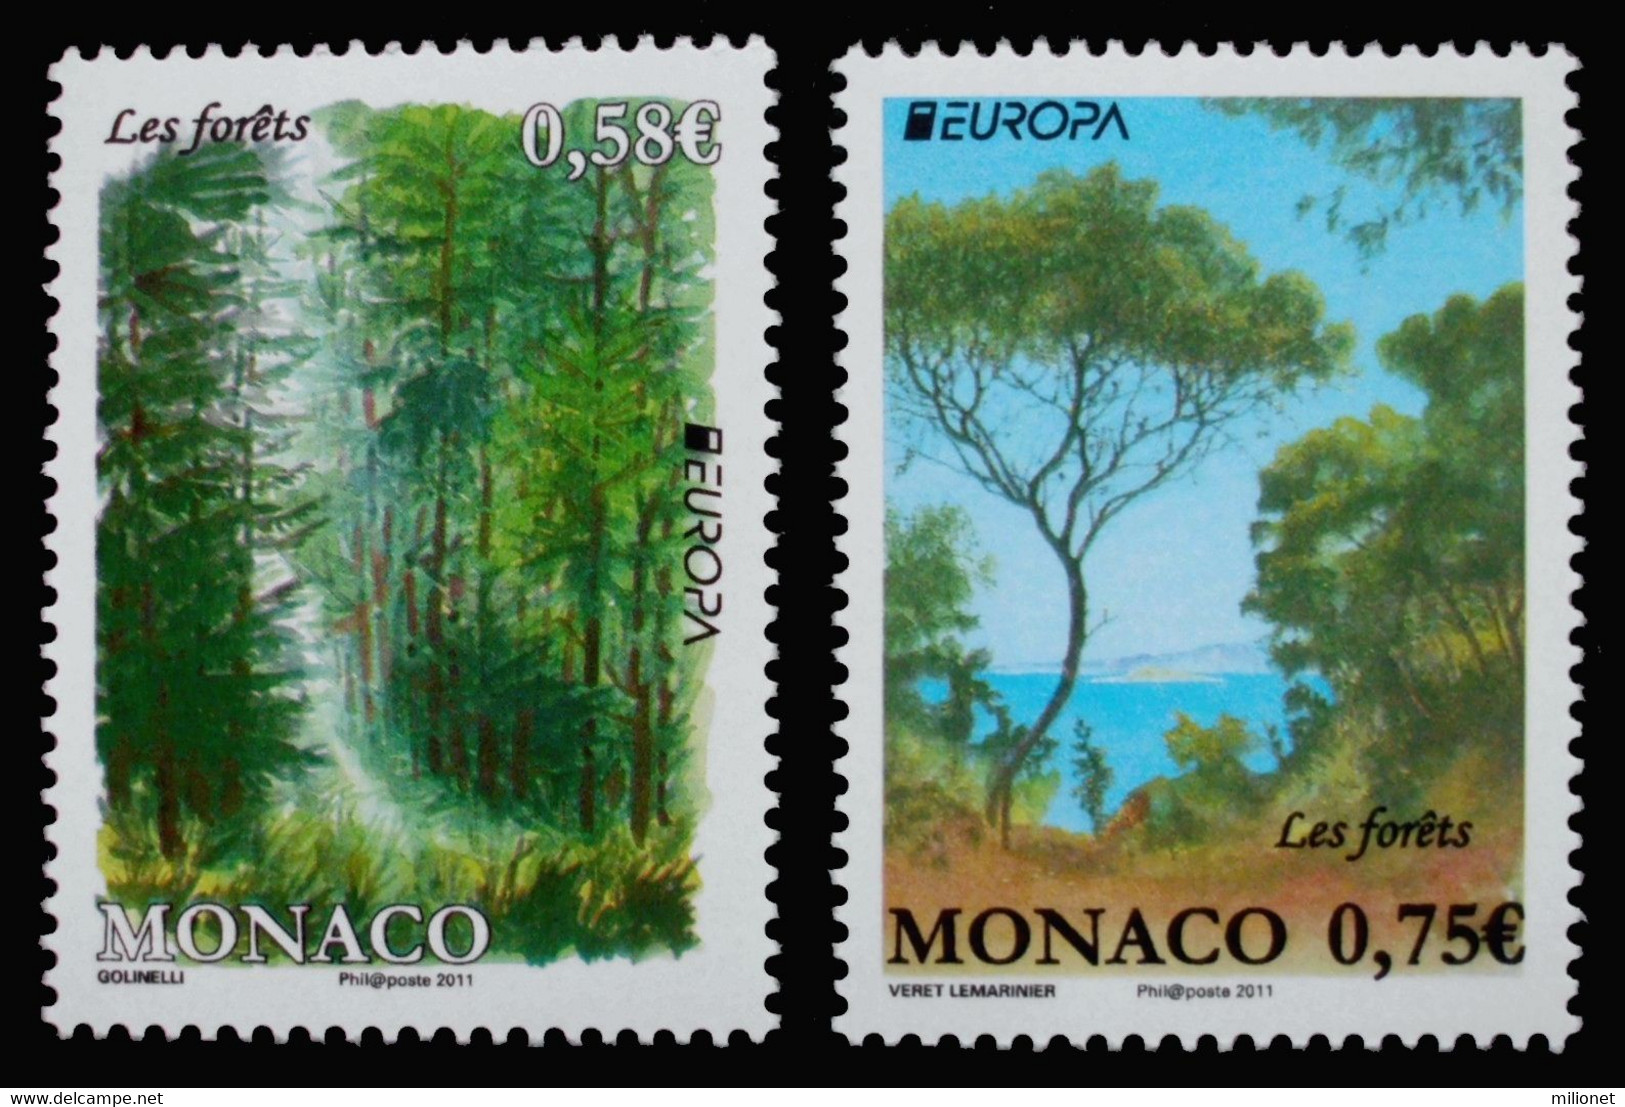 SALE!!! MONACO MONAKO 2011 EUROPA CEPT FORESTS 1 Stamp Set MNH ** - 2011